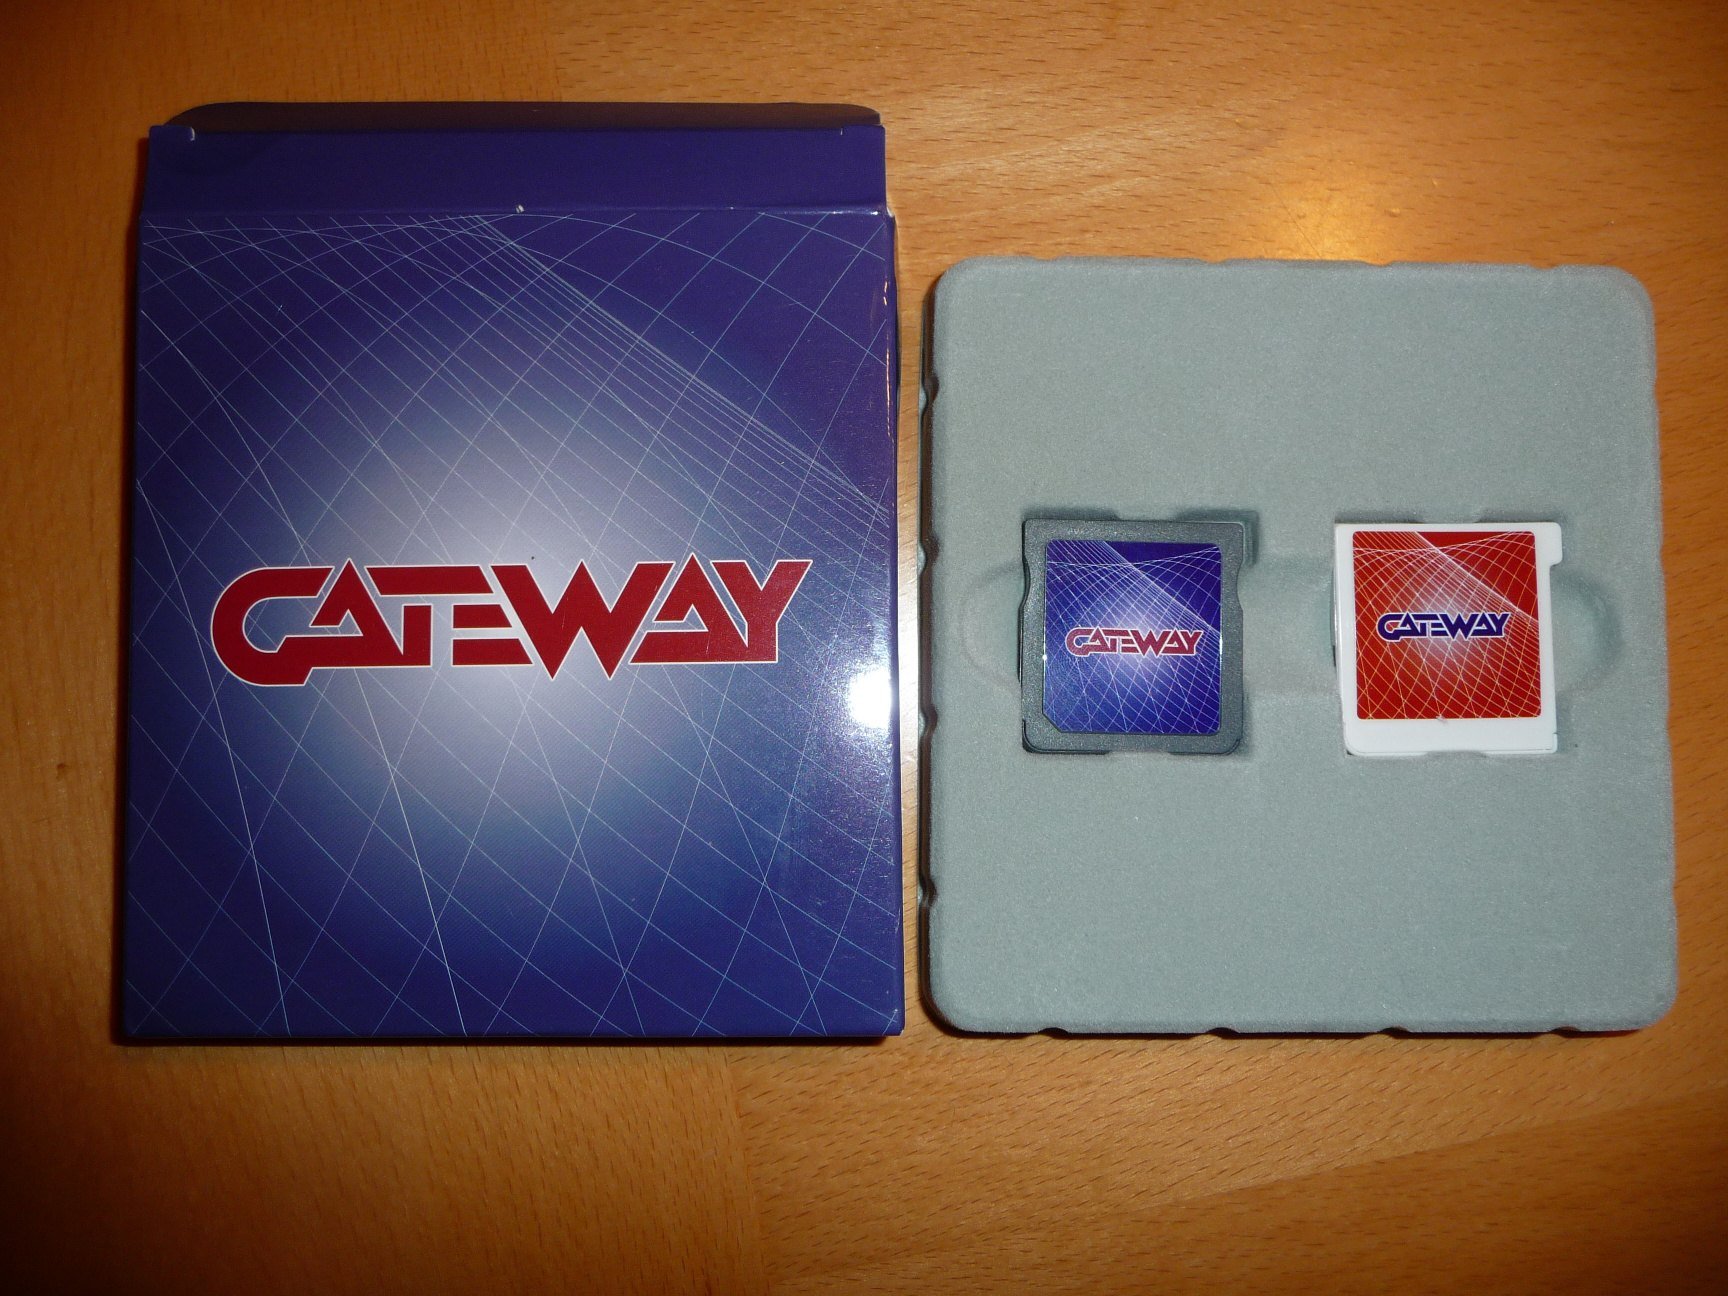 Legit Gateway 3DS? | GBAtemp.net - The Independent Video Game Community